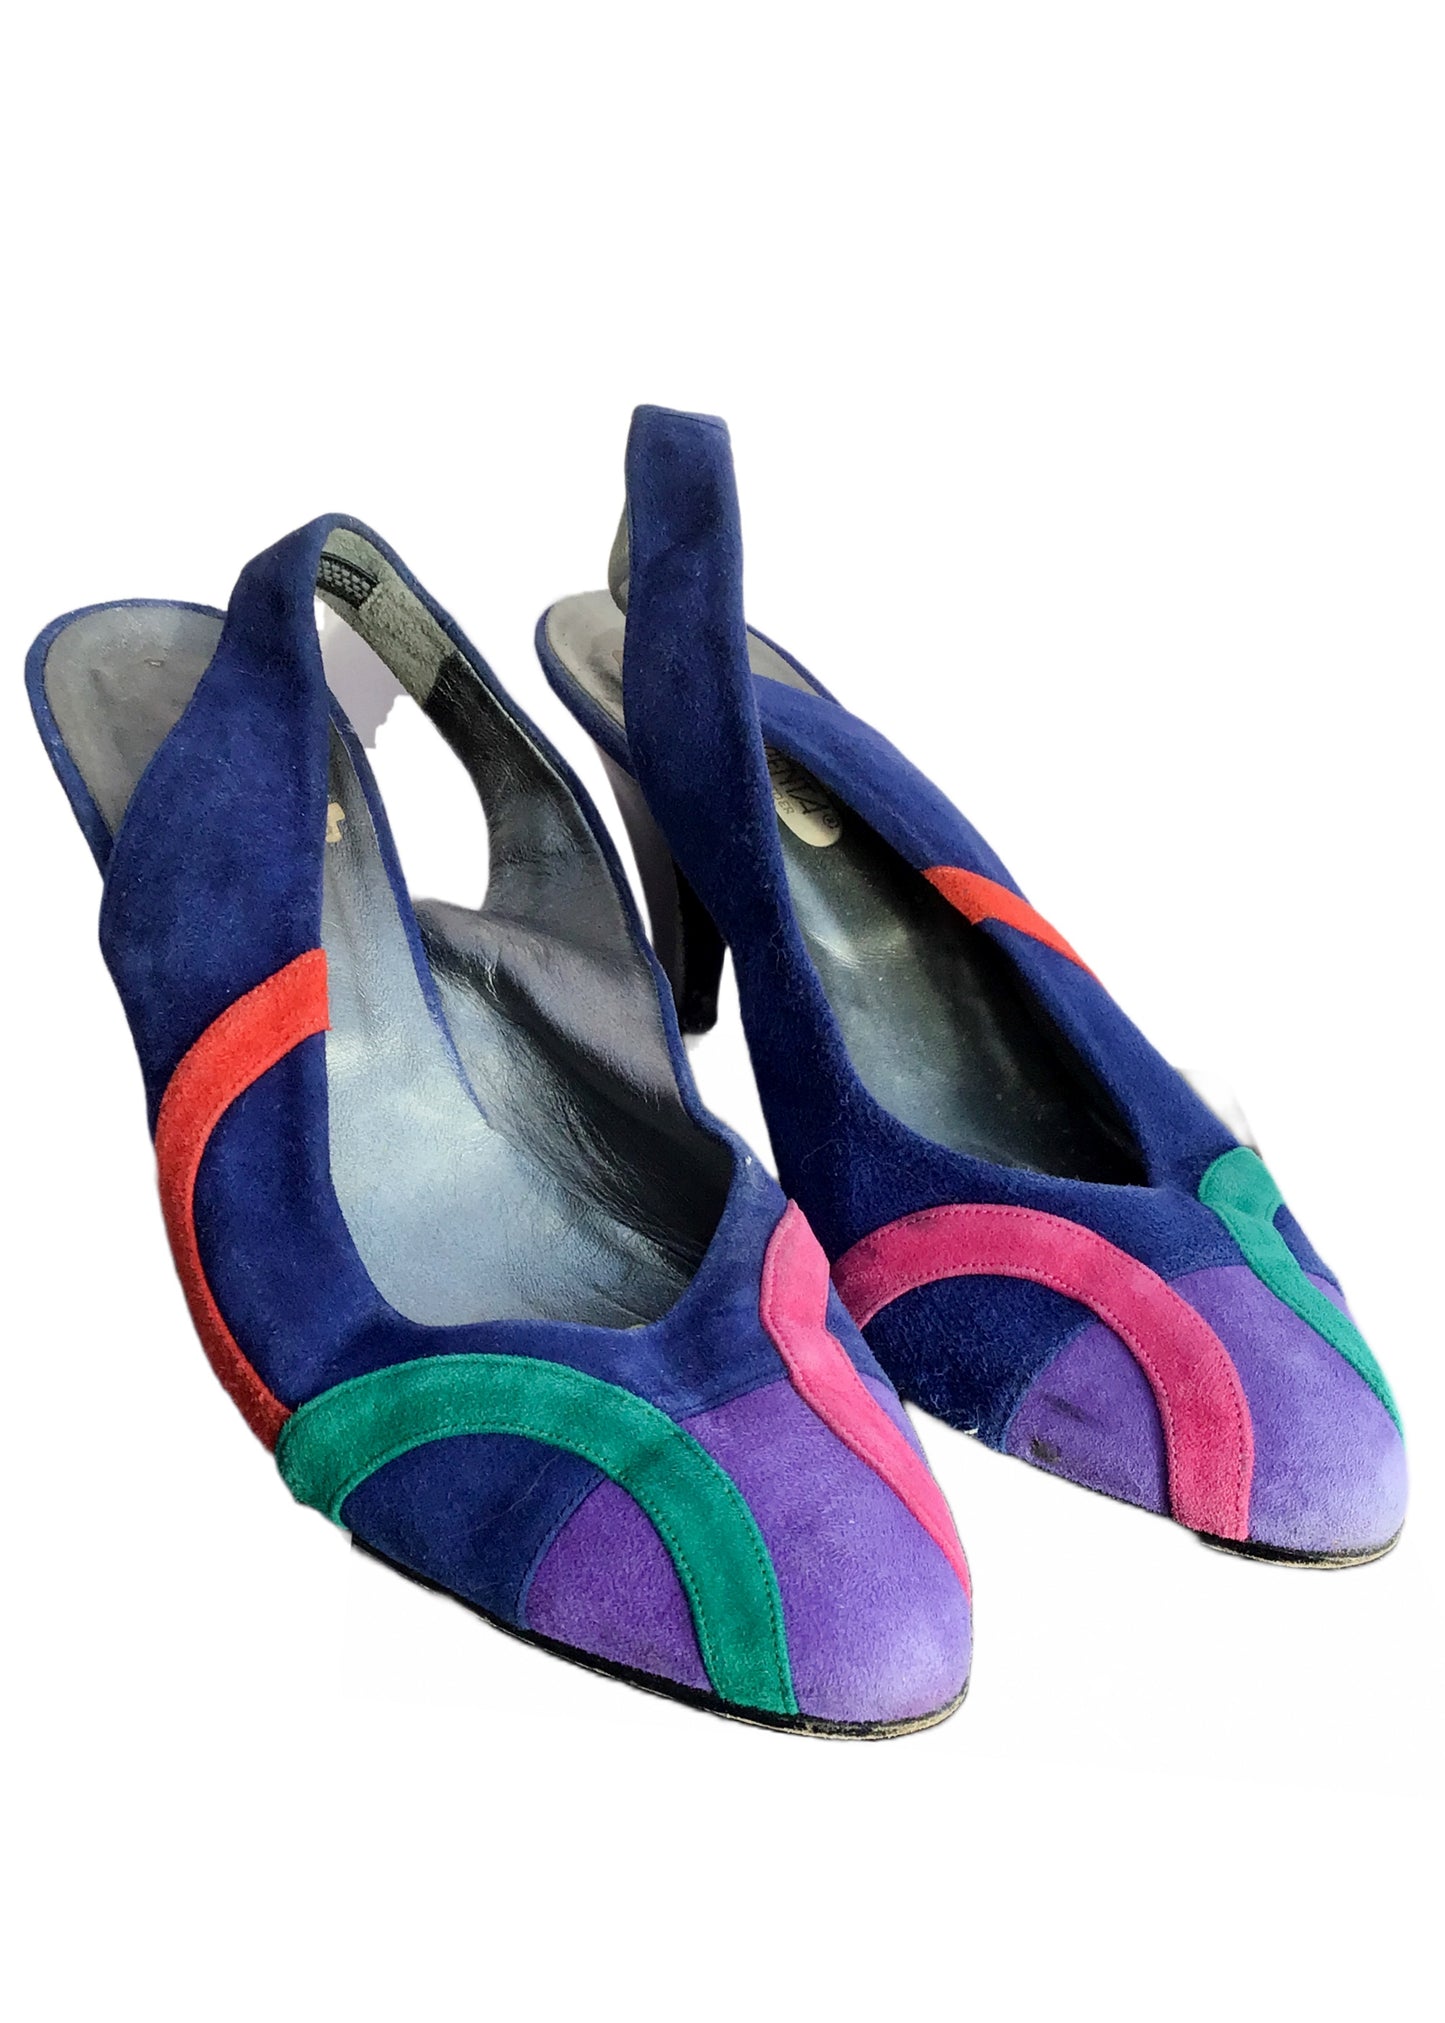 Vintage 80s Blue Suede Slingback Sandals Shoes • size 39